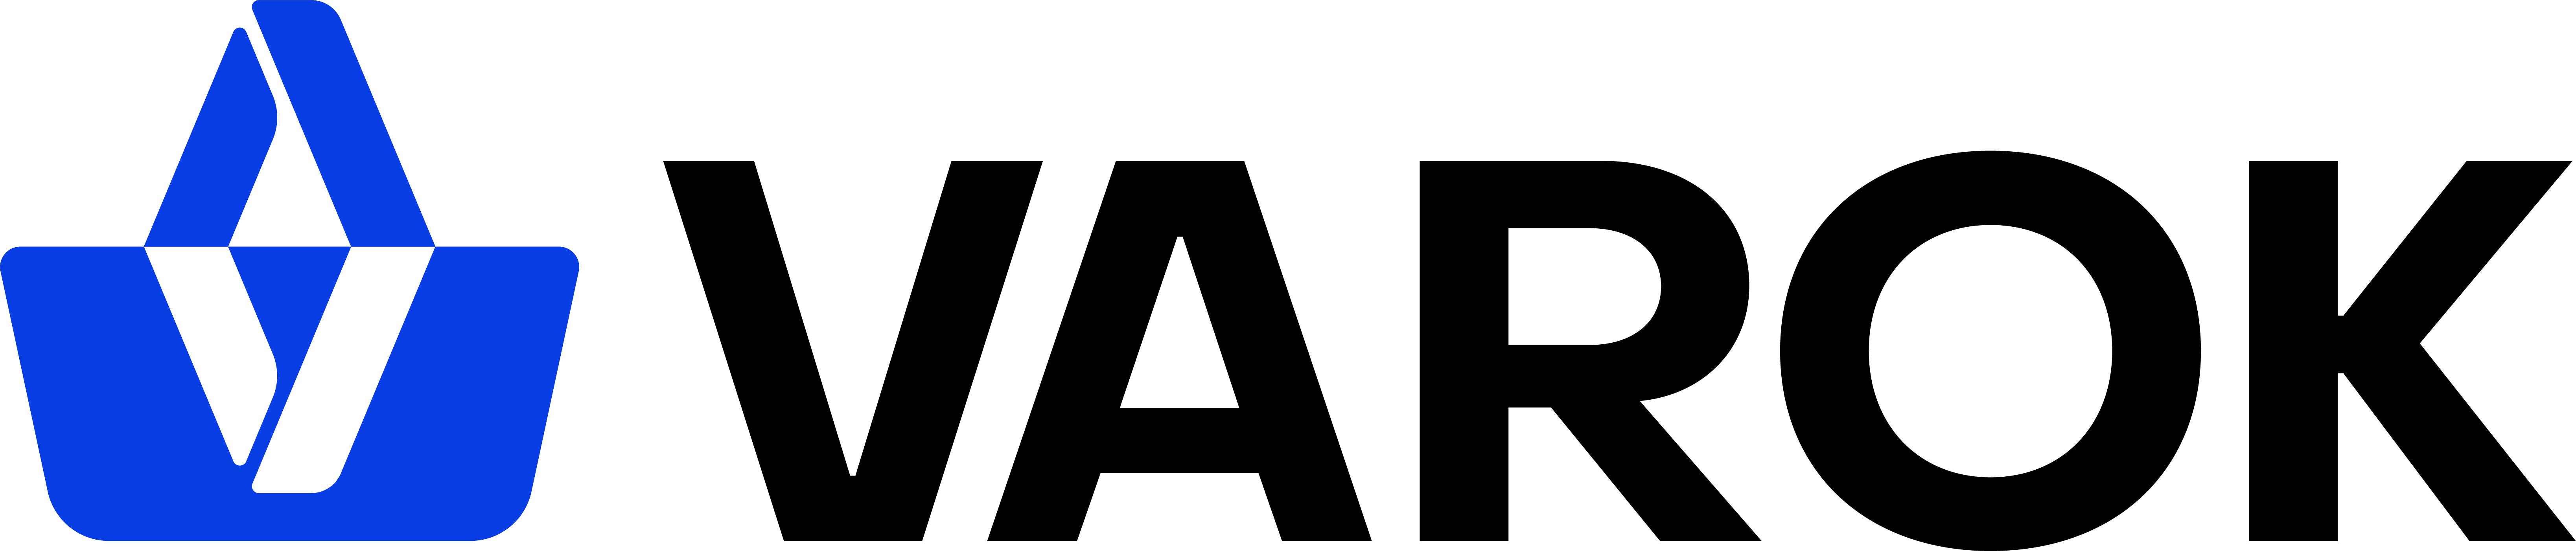 Varok Main Logotype